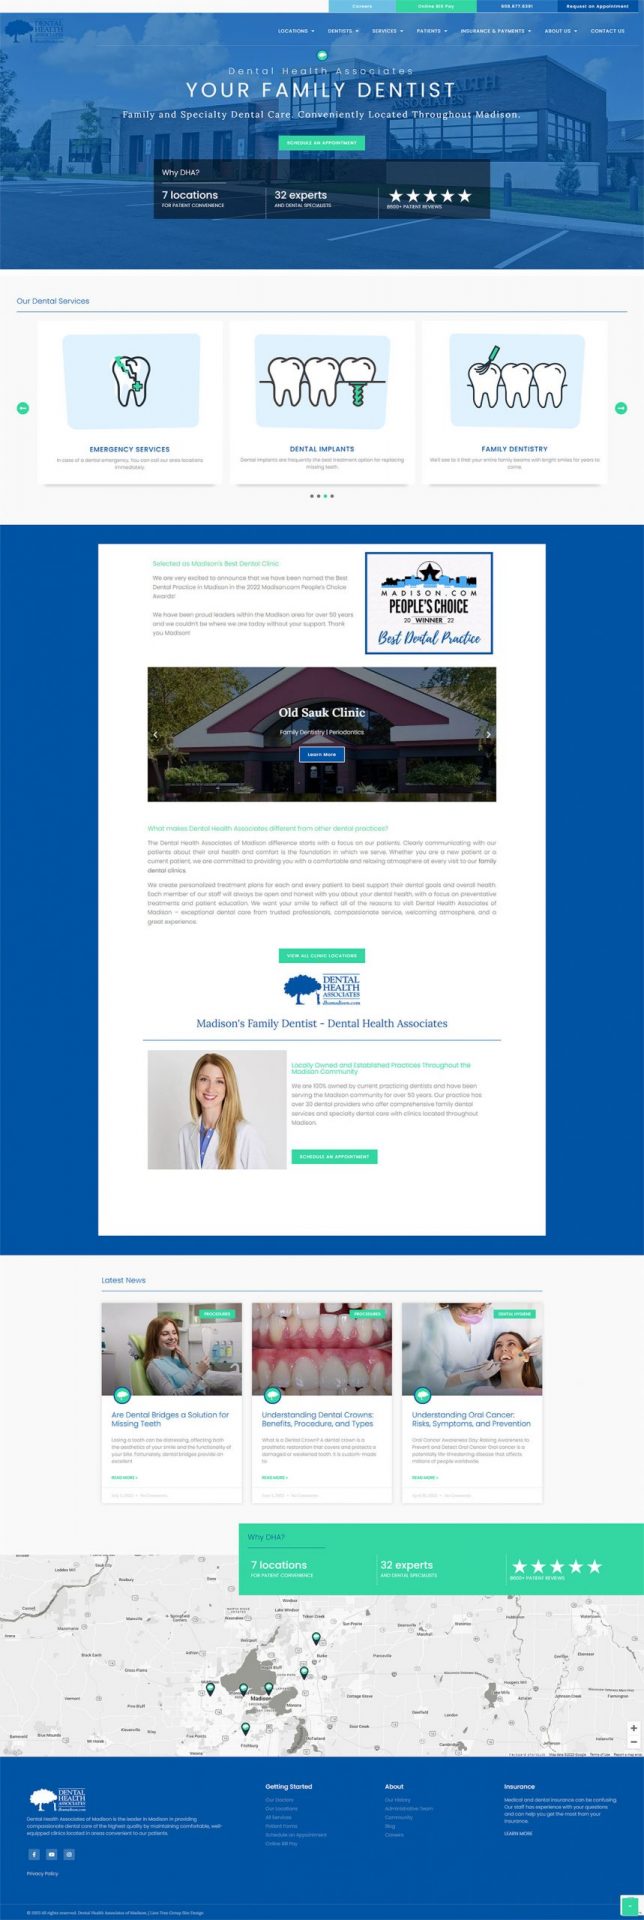 Dental Health Associates homepage